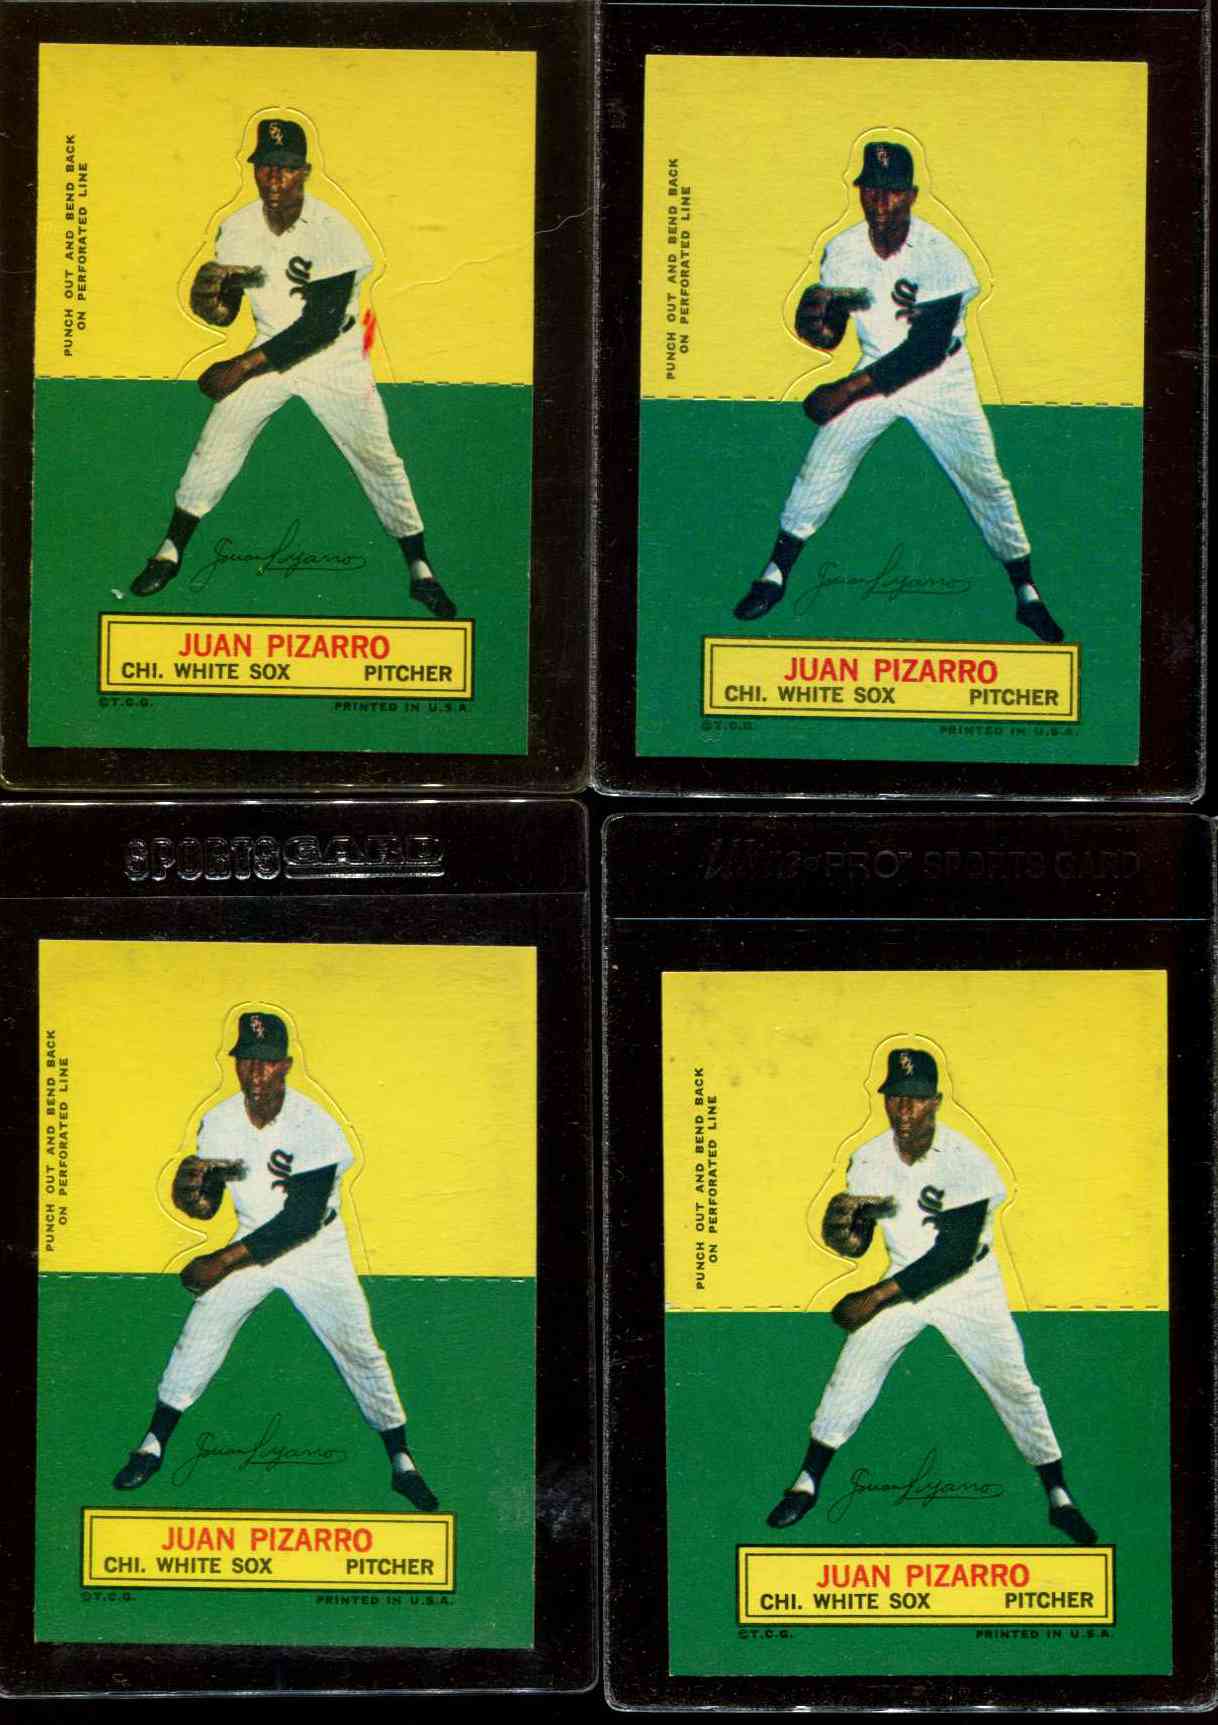 1964 Topps Stand-Ups/Standups - Juan Pizarro (White Sox) Baseball cards value